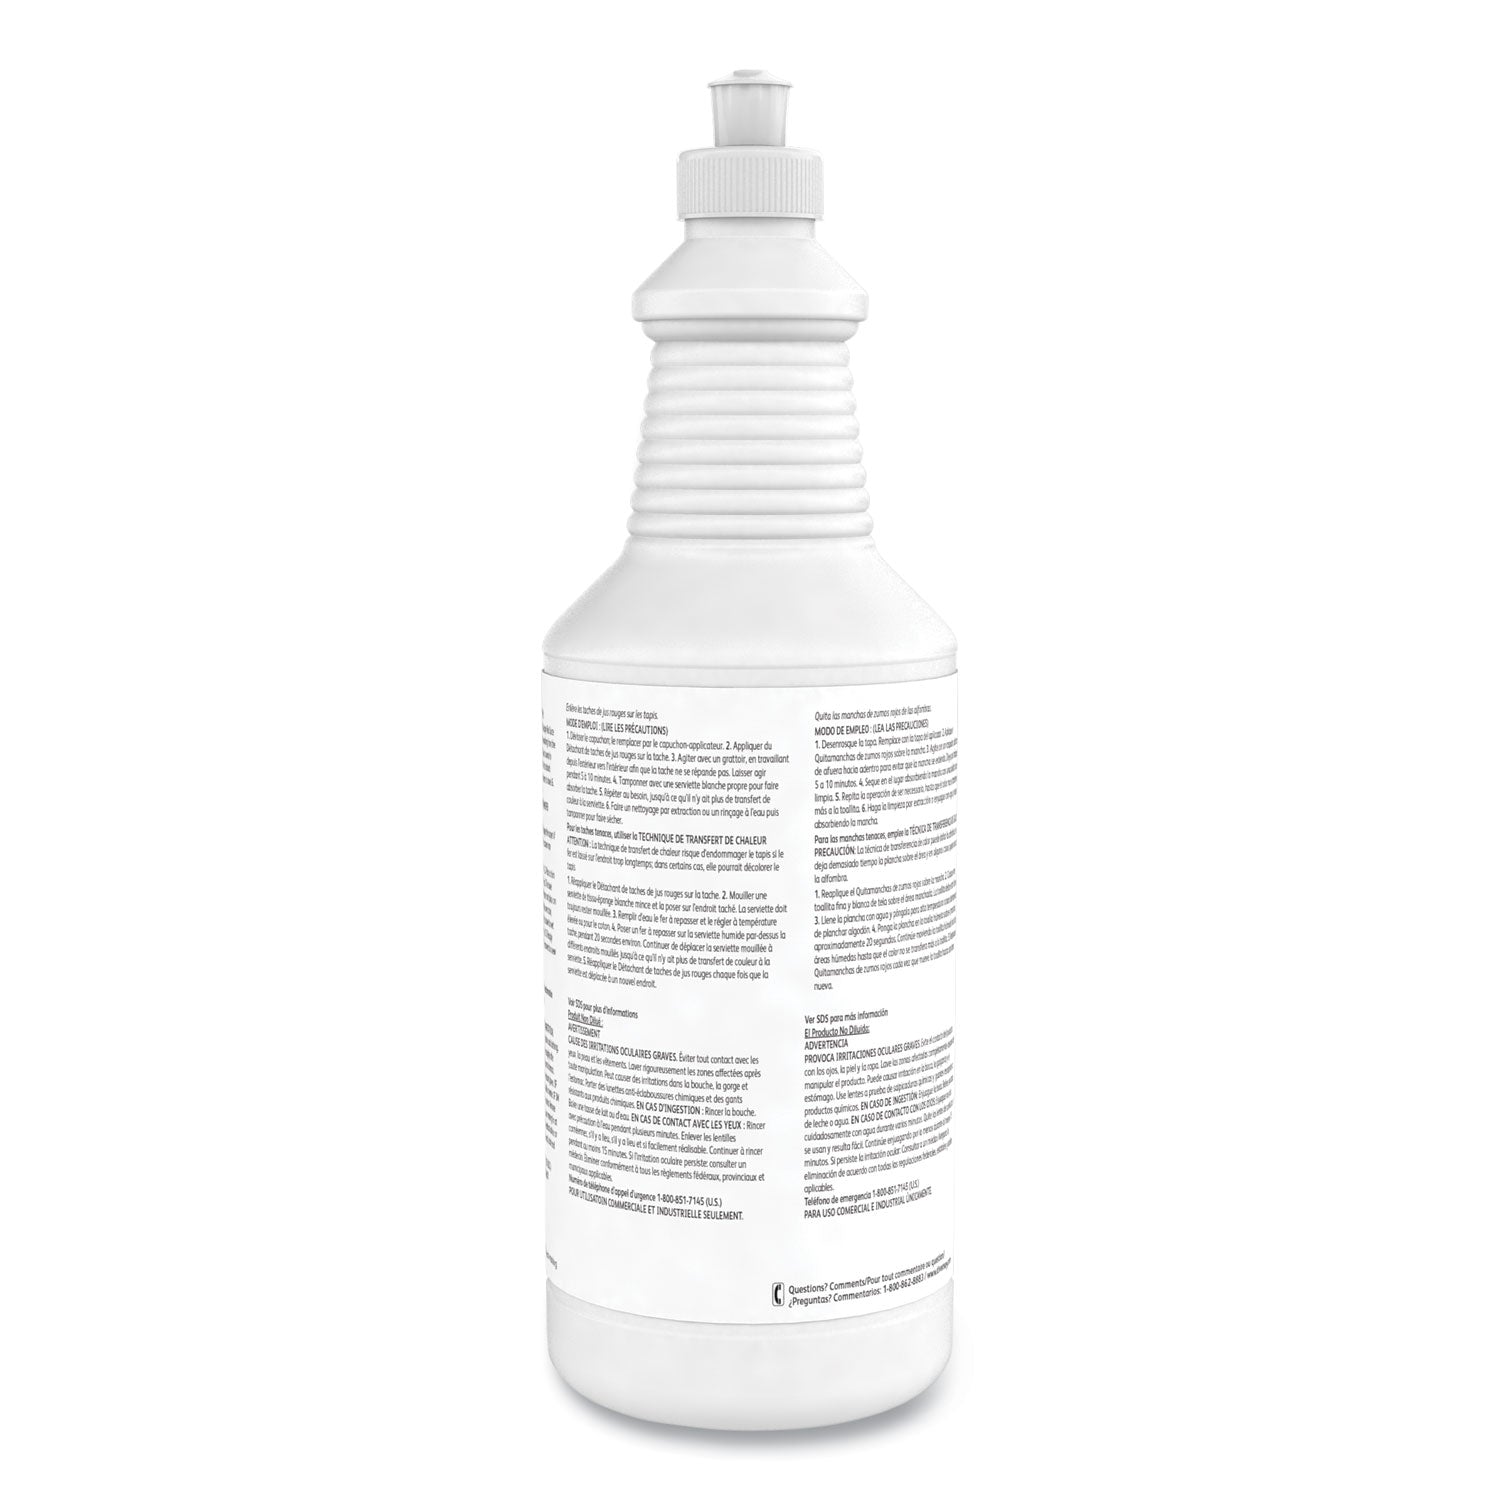 red-juice-stain-remover-32-oz-bottle-6-bottles-carton_dvo95002540 - 2